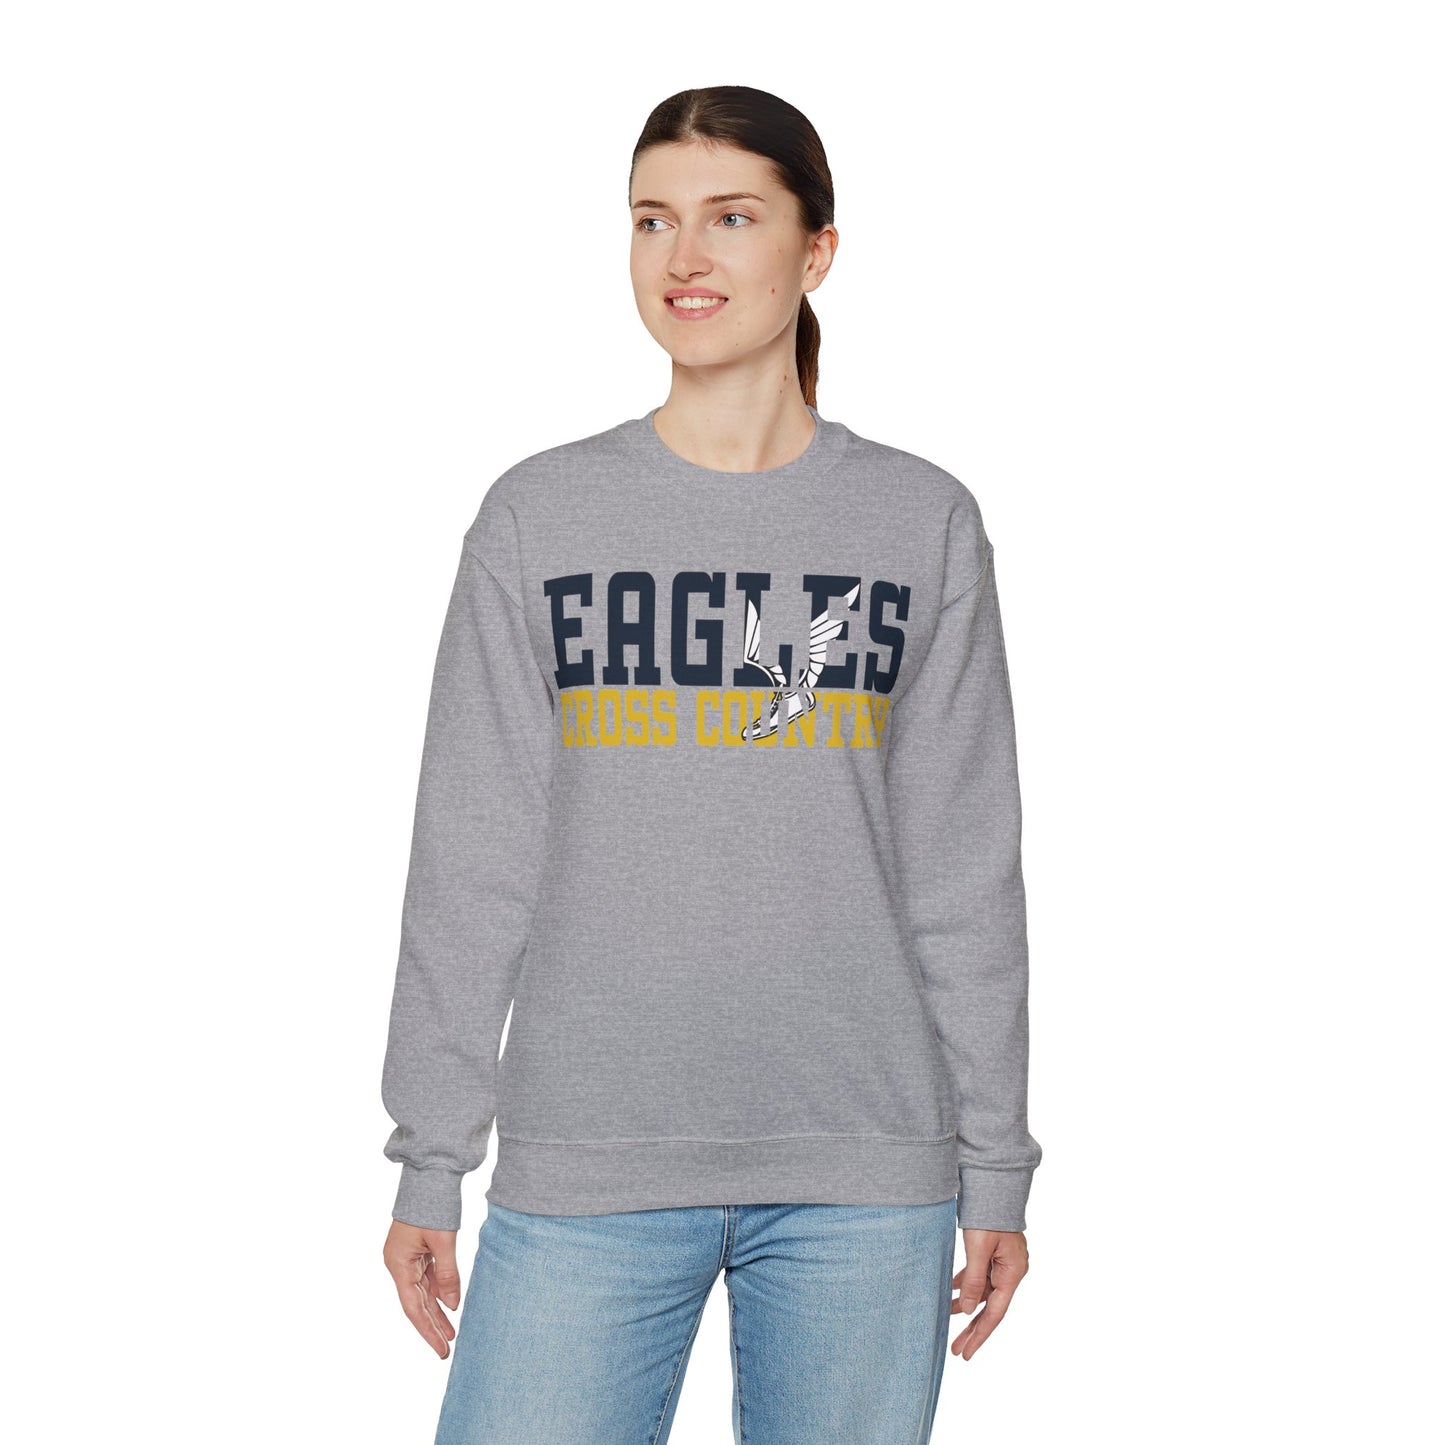 Cross Country - Gildan Unisex Heavy Blend™ Crewneck Sweatshirt